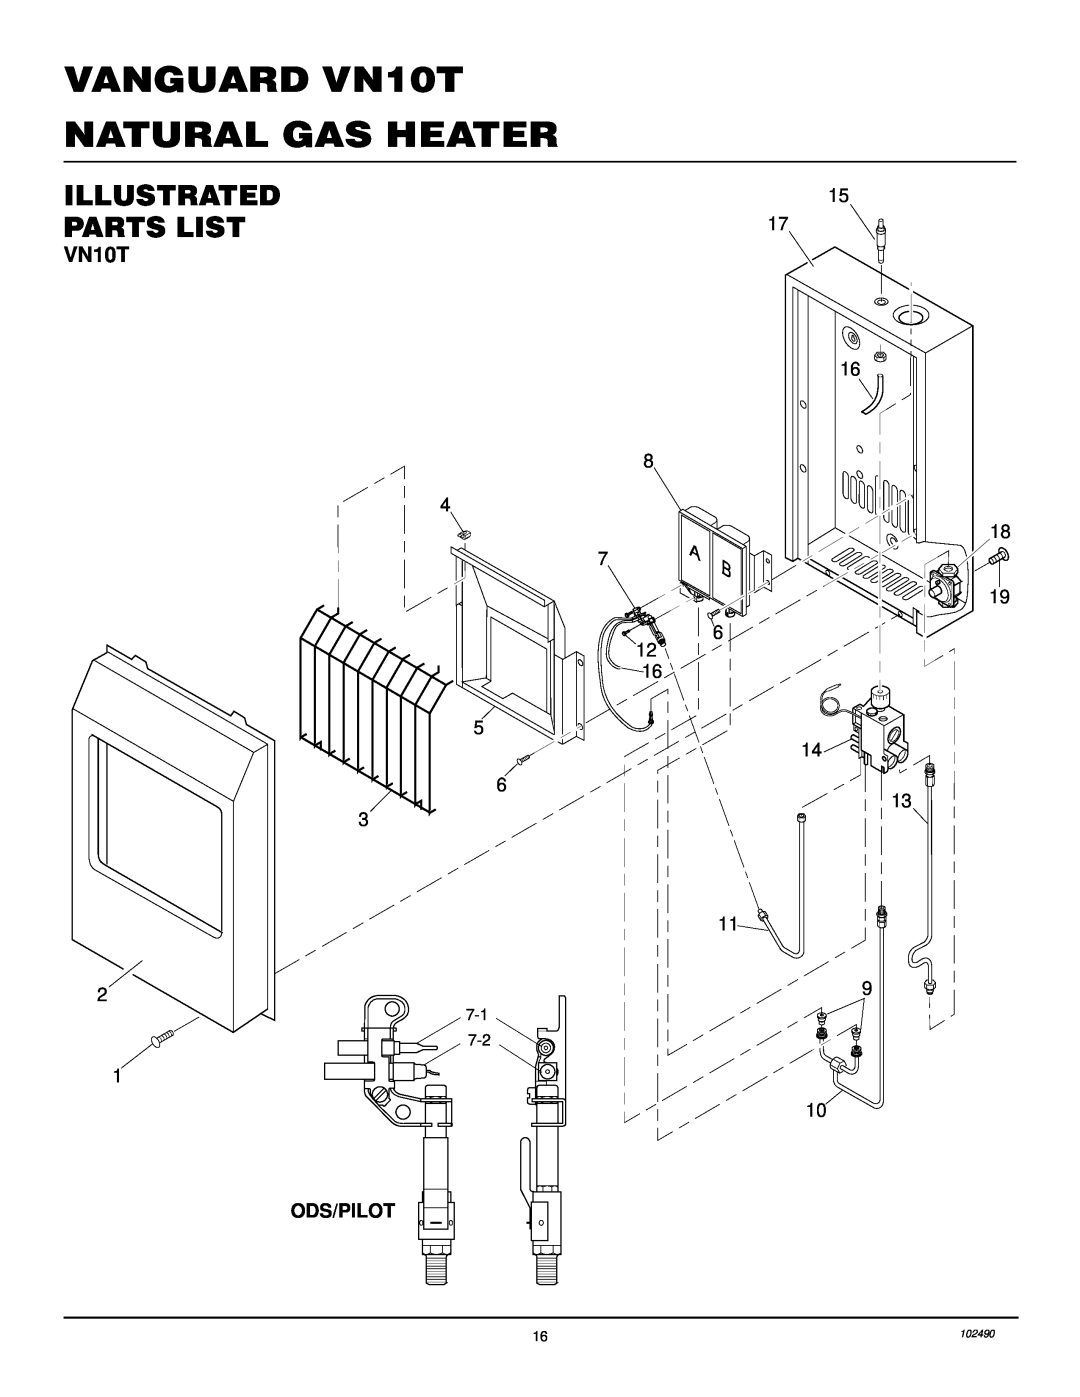 Desa installation manual Illustrated Parts List, Ods/Pilot, VANGUARD VN10T NATURAL GAS HEATER, 102490 